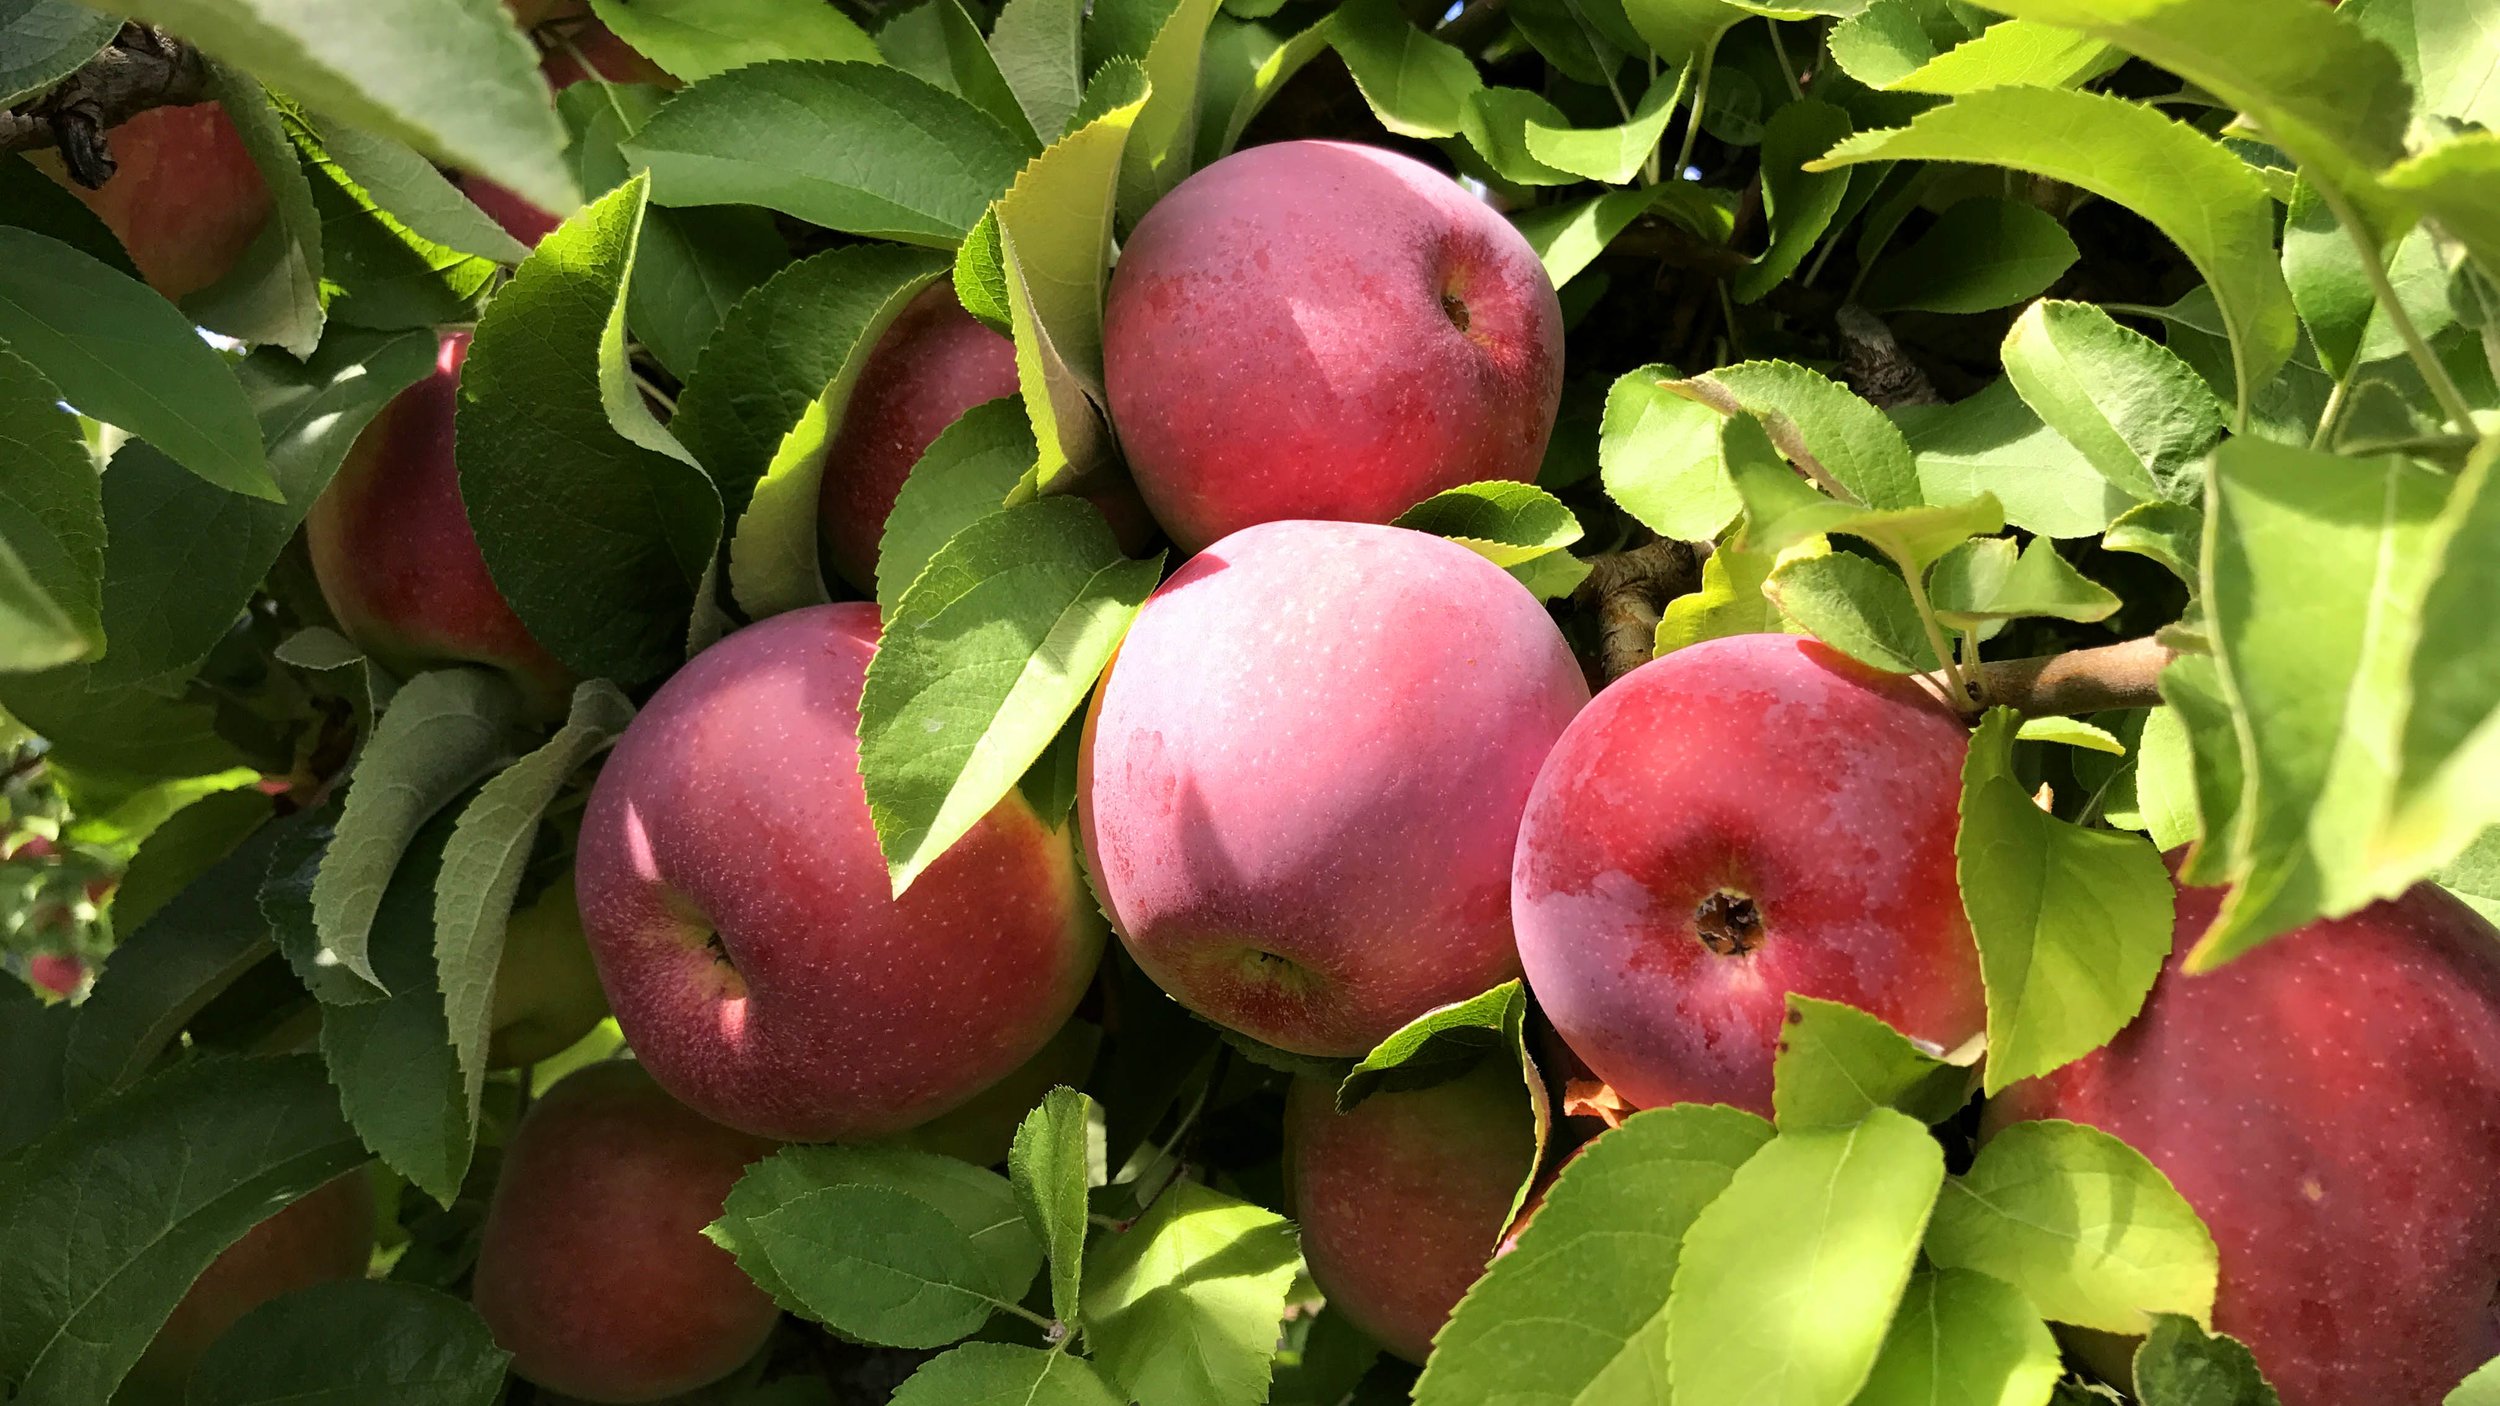 Apple picking at Terhune Orchards.